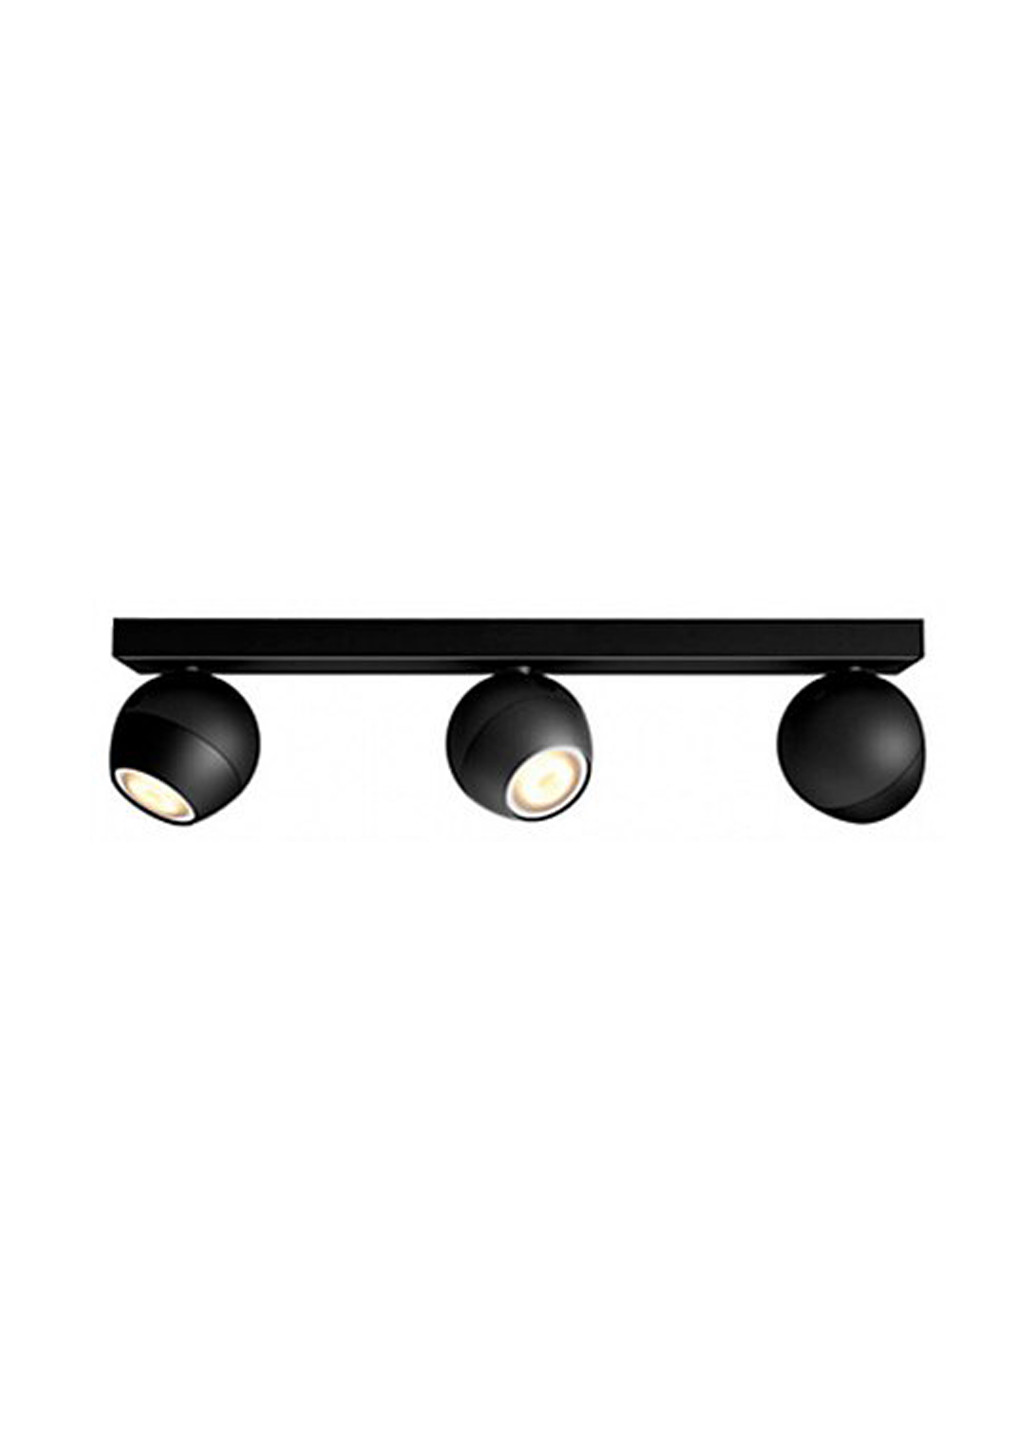 Смарт-світильник BUCKRAM bar / tube black 3x5.5W 240V (50473/30 / P7) Philips смарт buckram bar/tube black 3x5.5w 240v (50473/30/p7) (142289703)